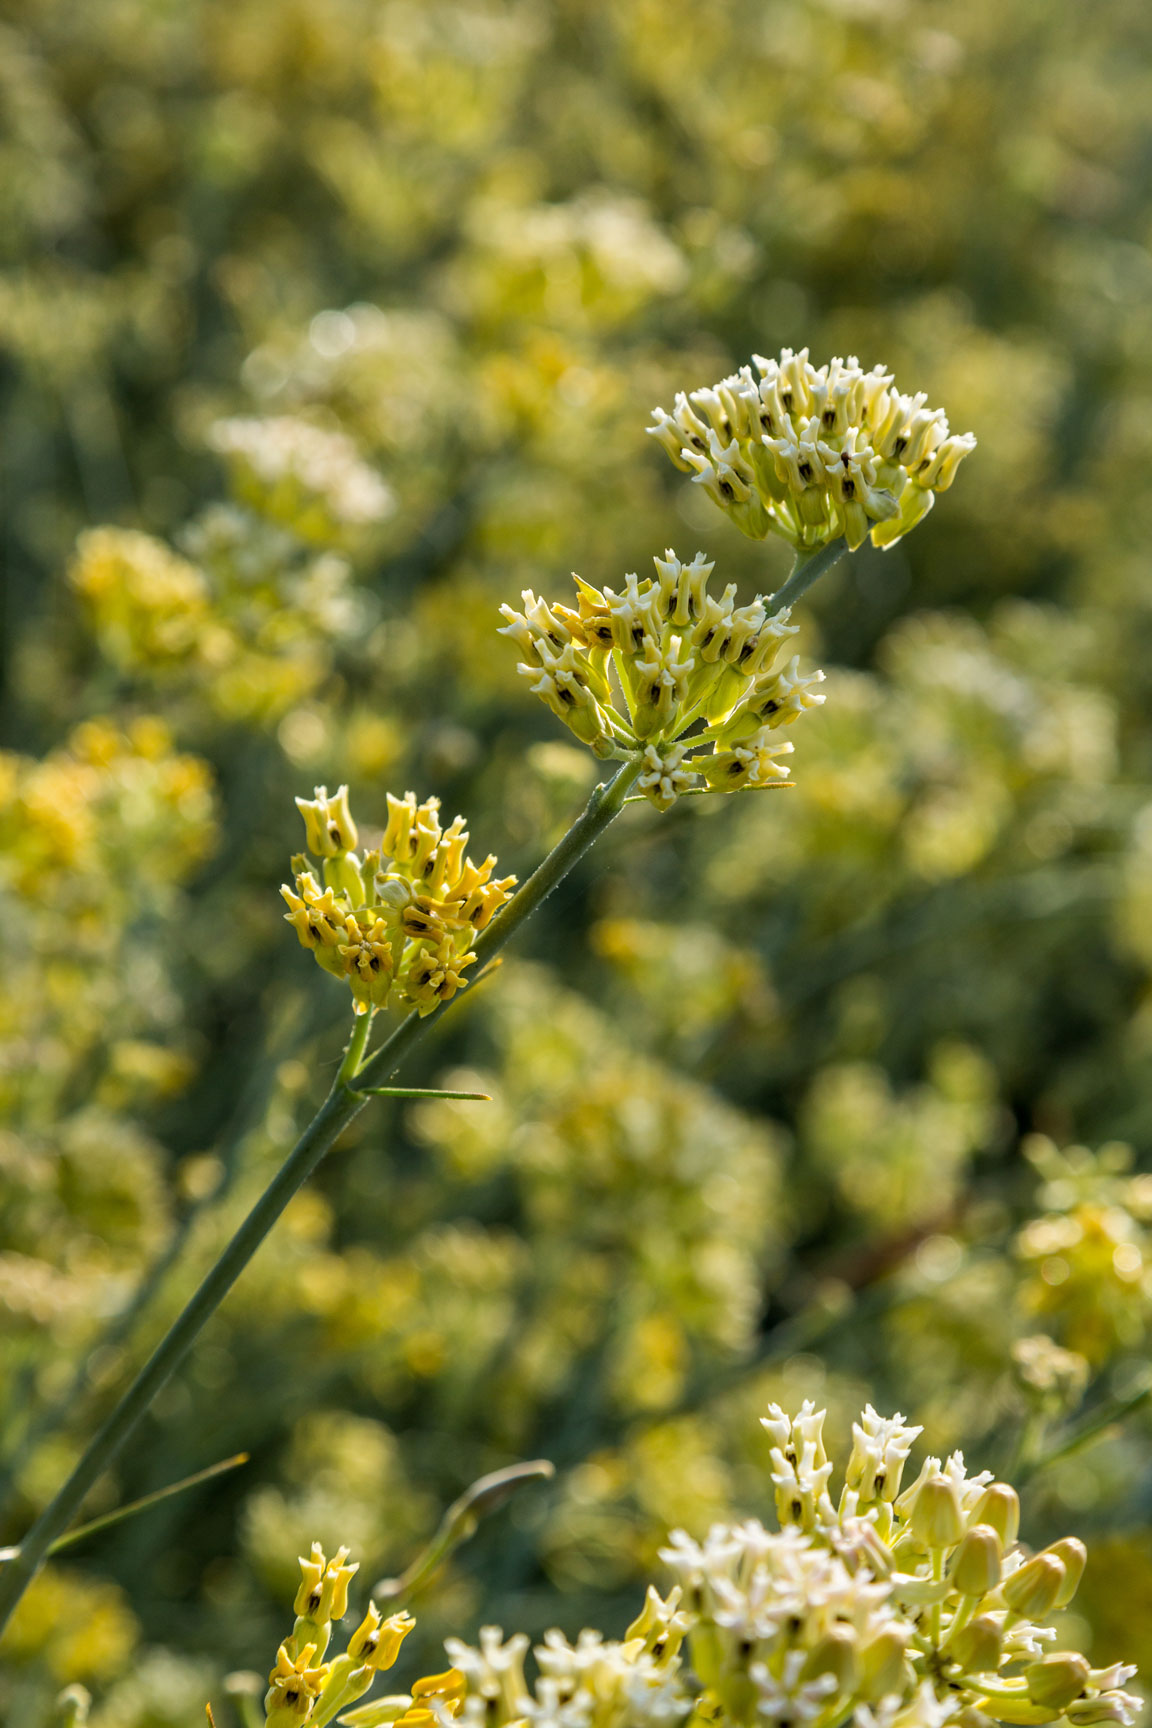 A close-up of Desert Milkweed flowers.